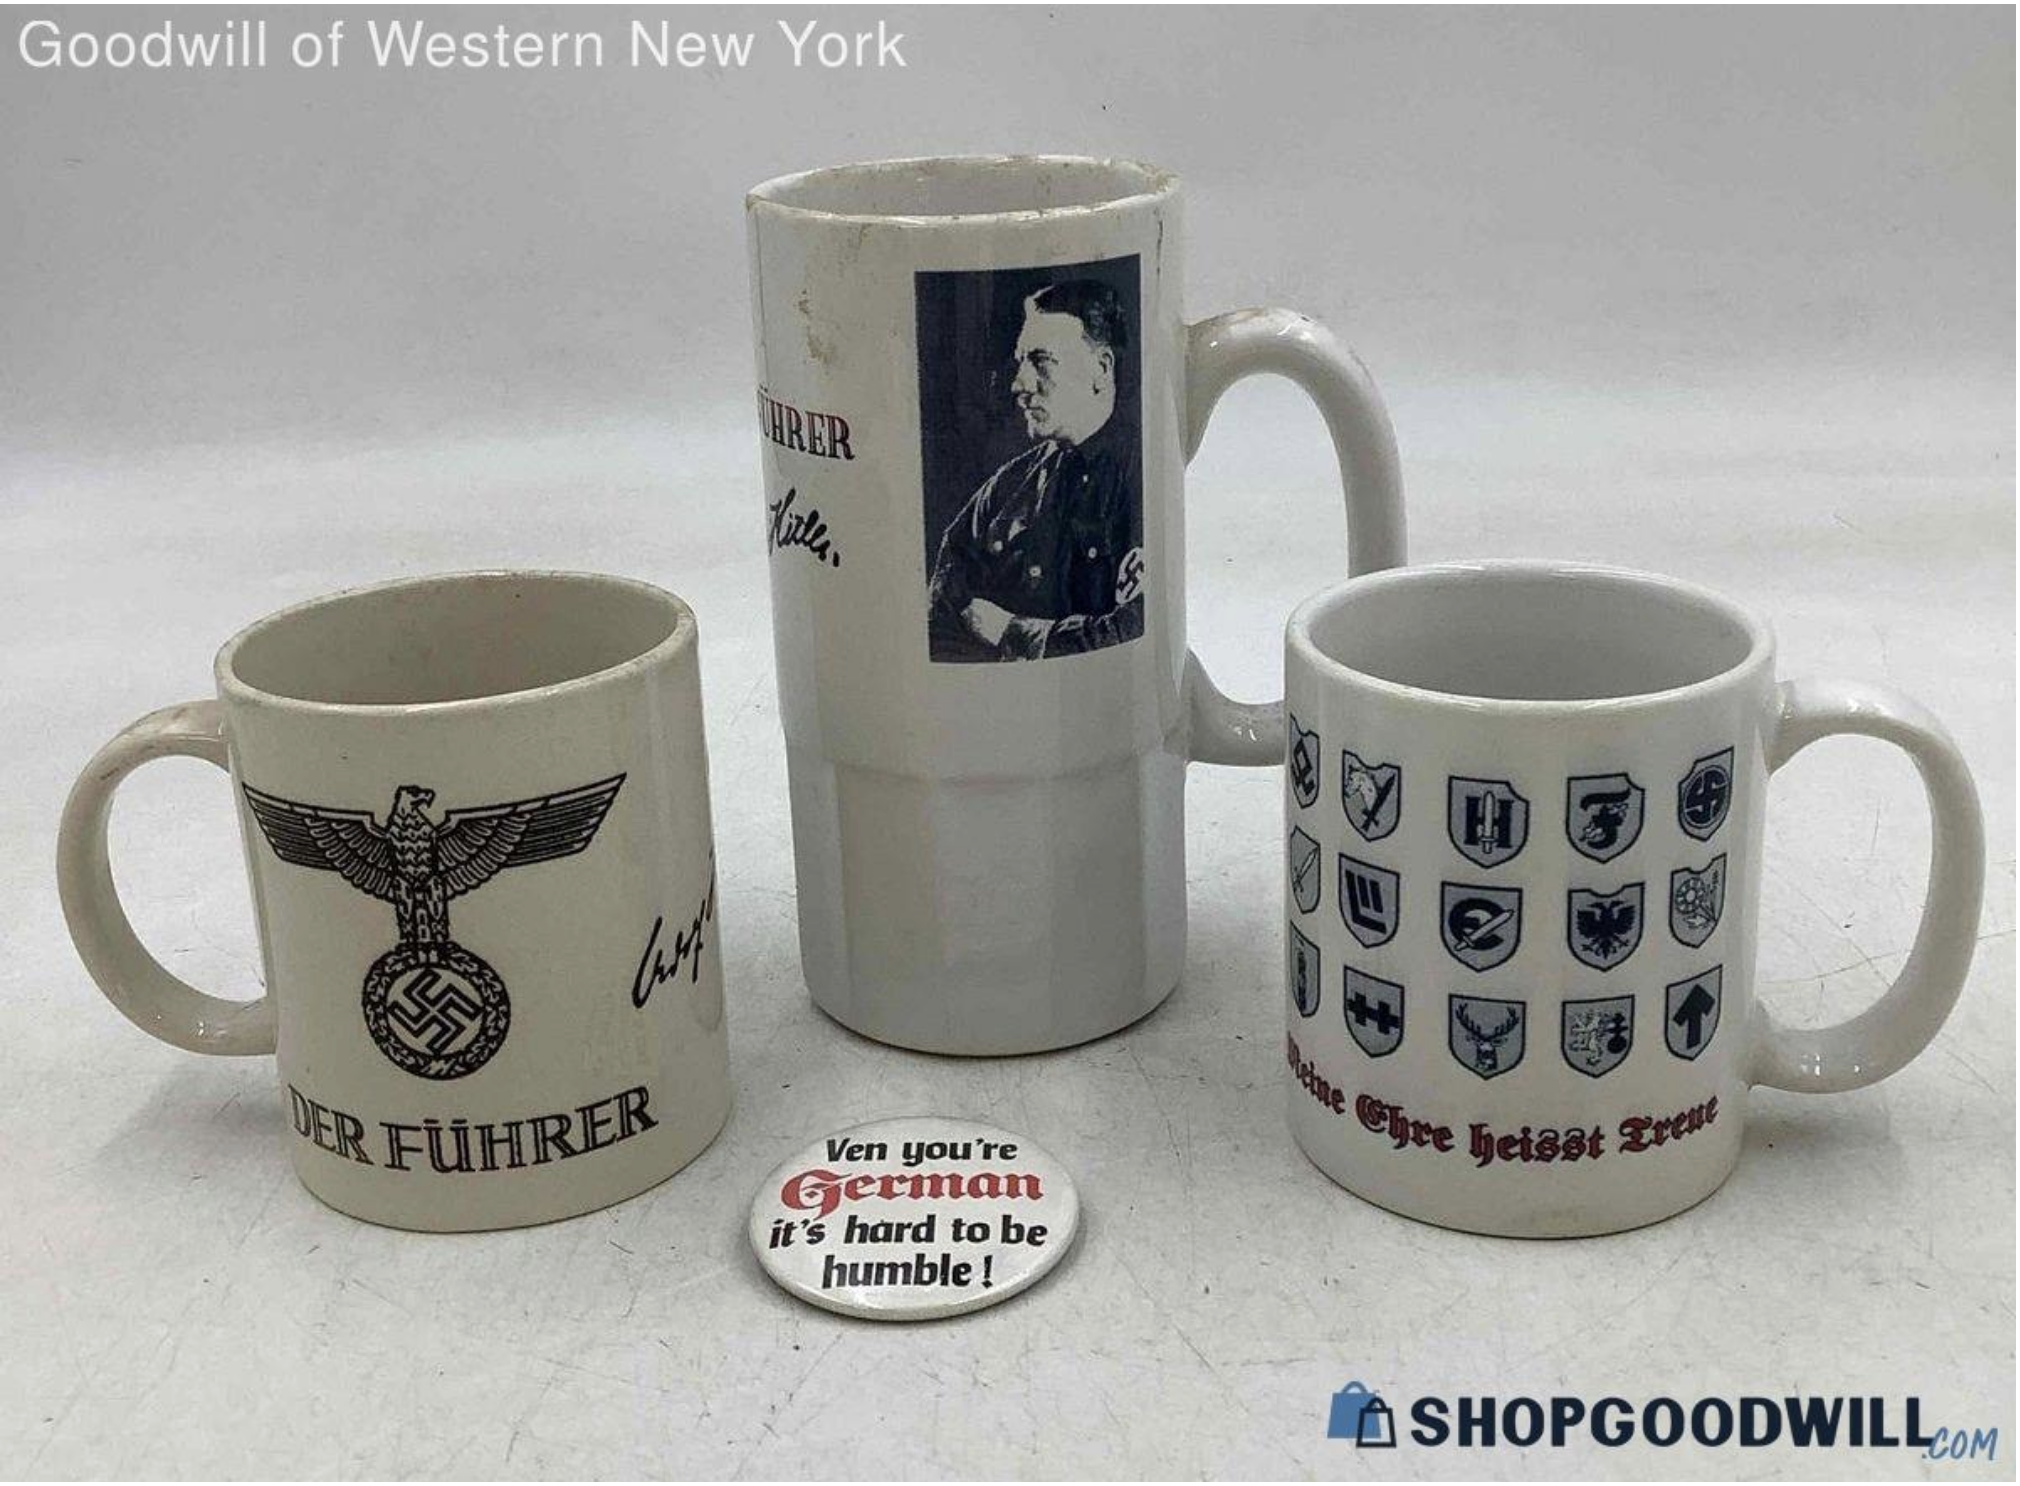 A screenshot of the Goodwill sale page featuring Nazi memorabilia.